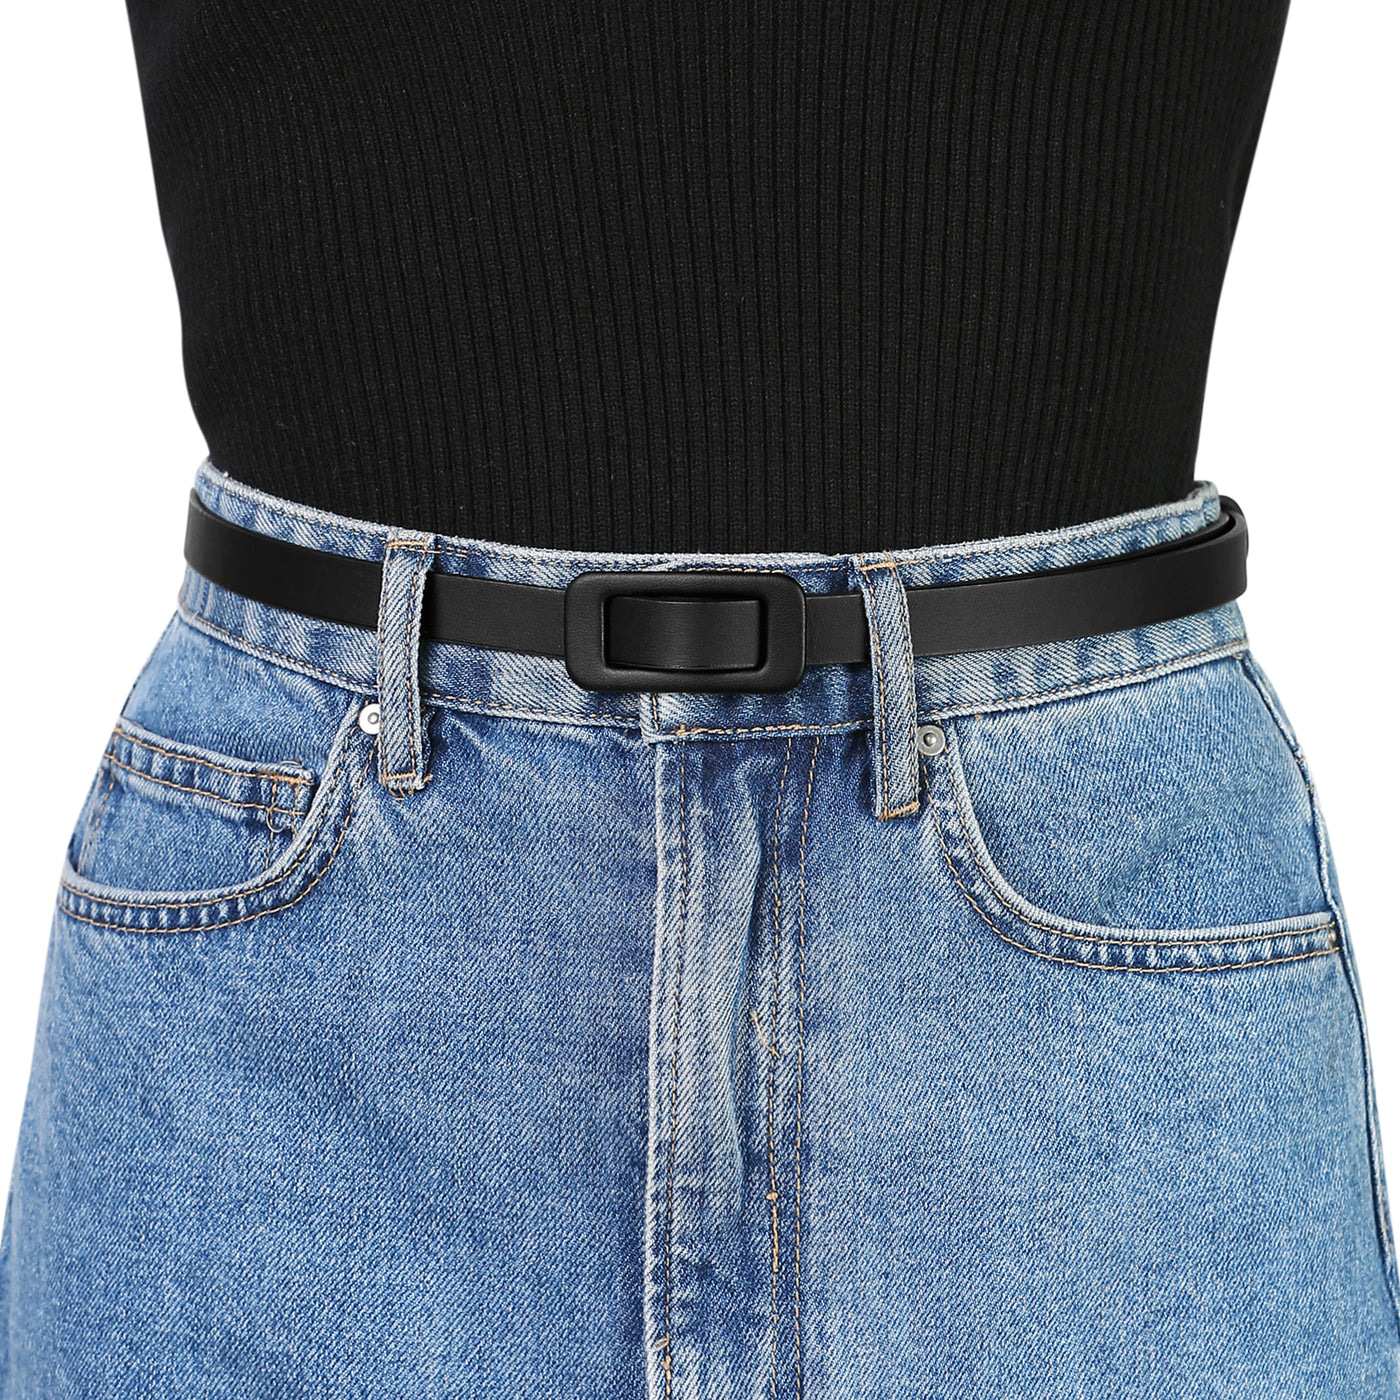 Allegra K Thin Nonporous Waist Rectangle Buckle Jeans Dress Plus Size Belts